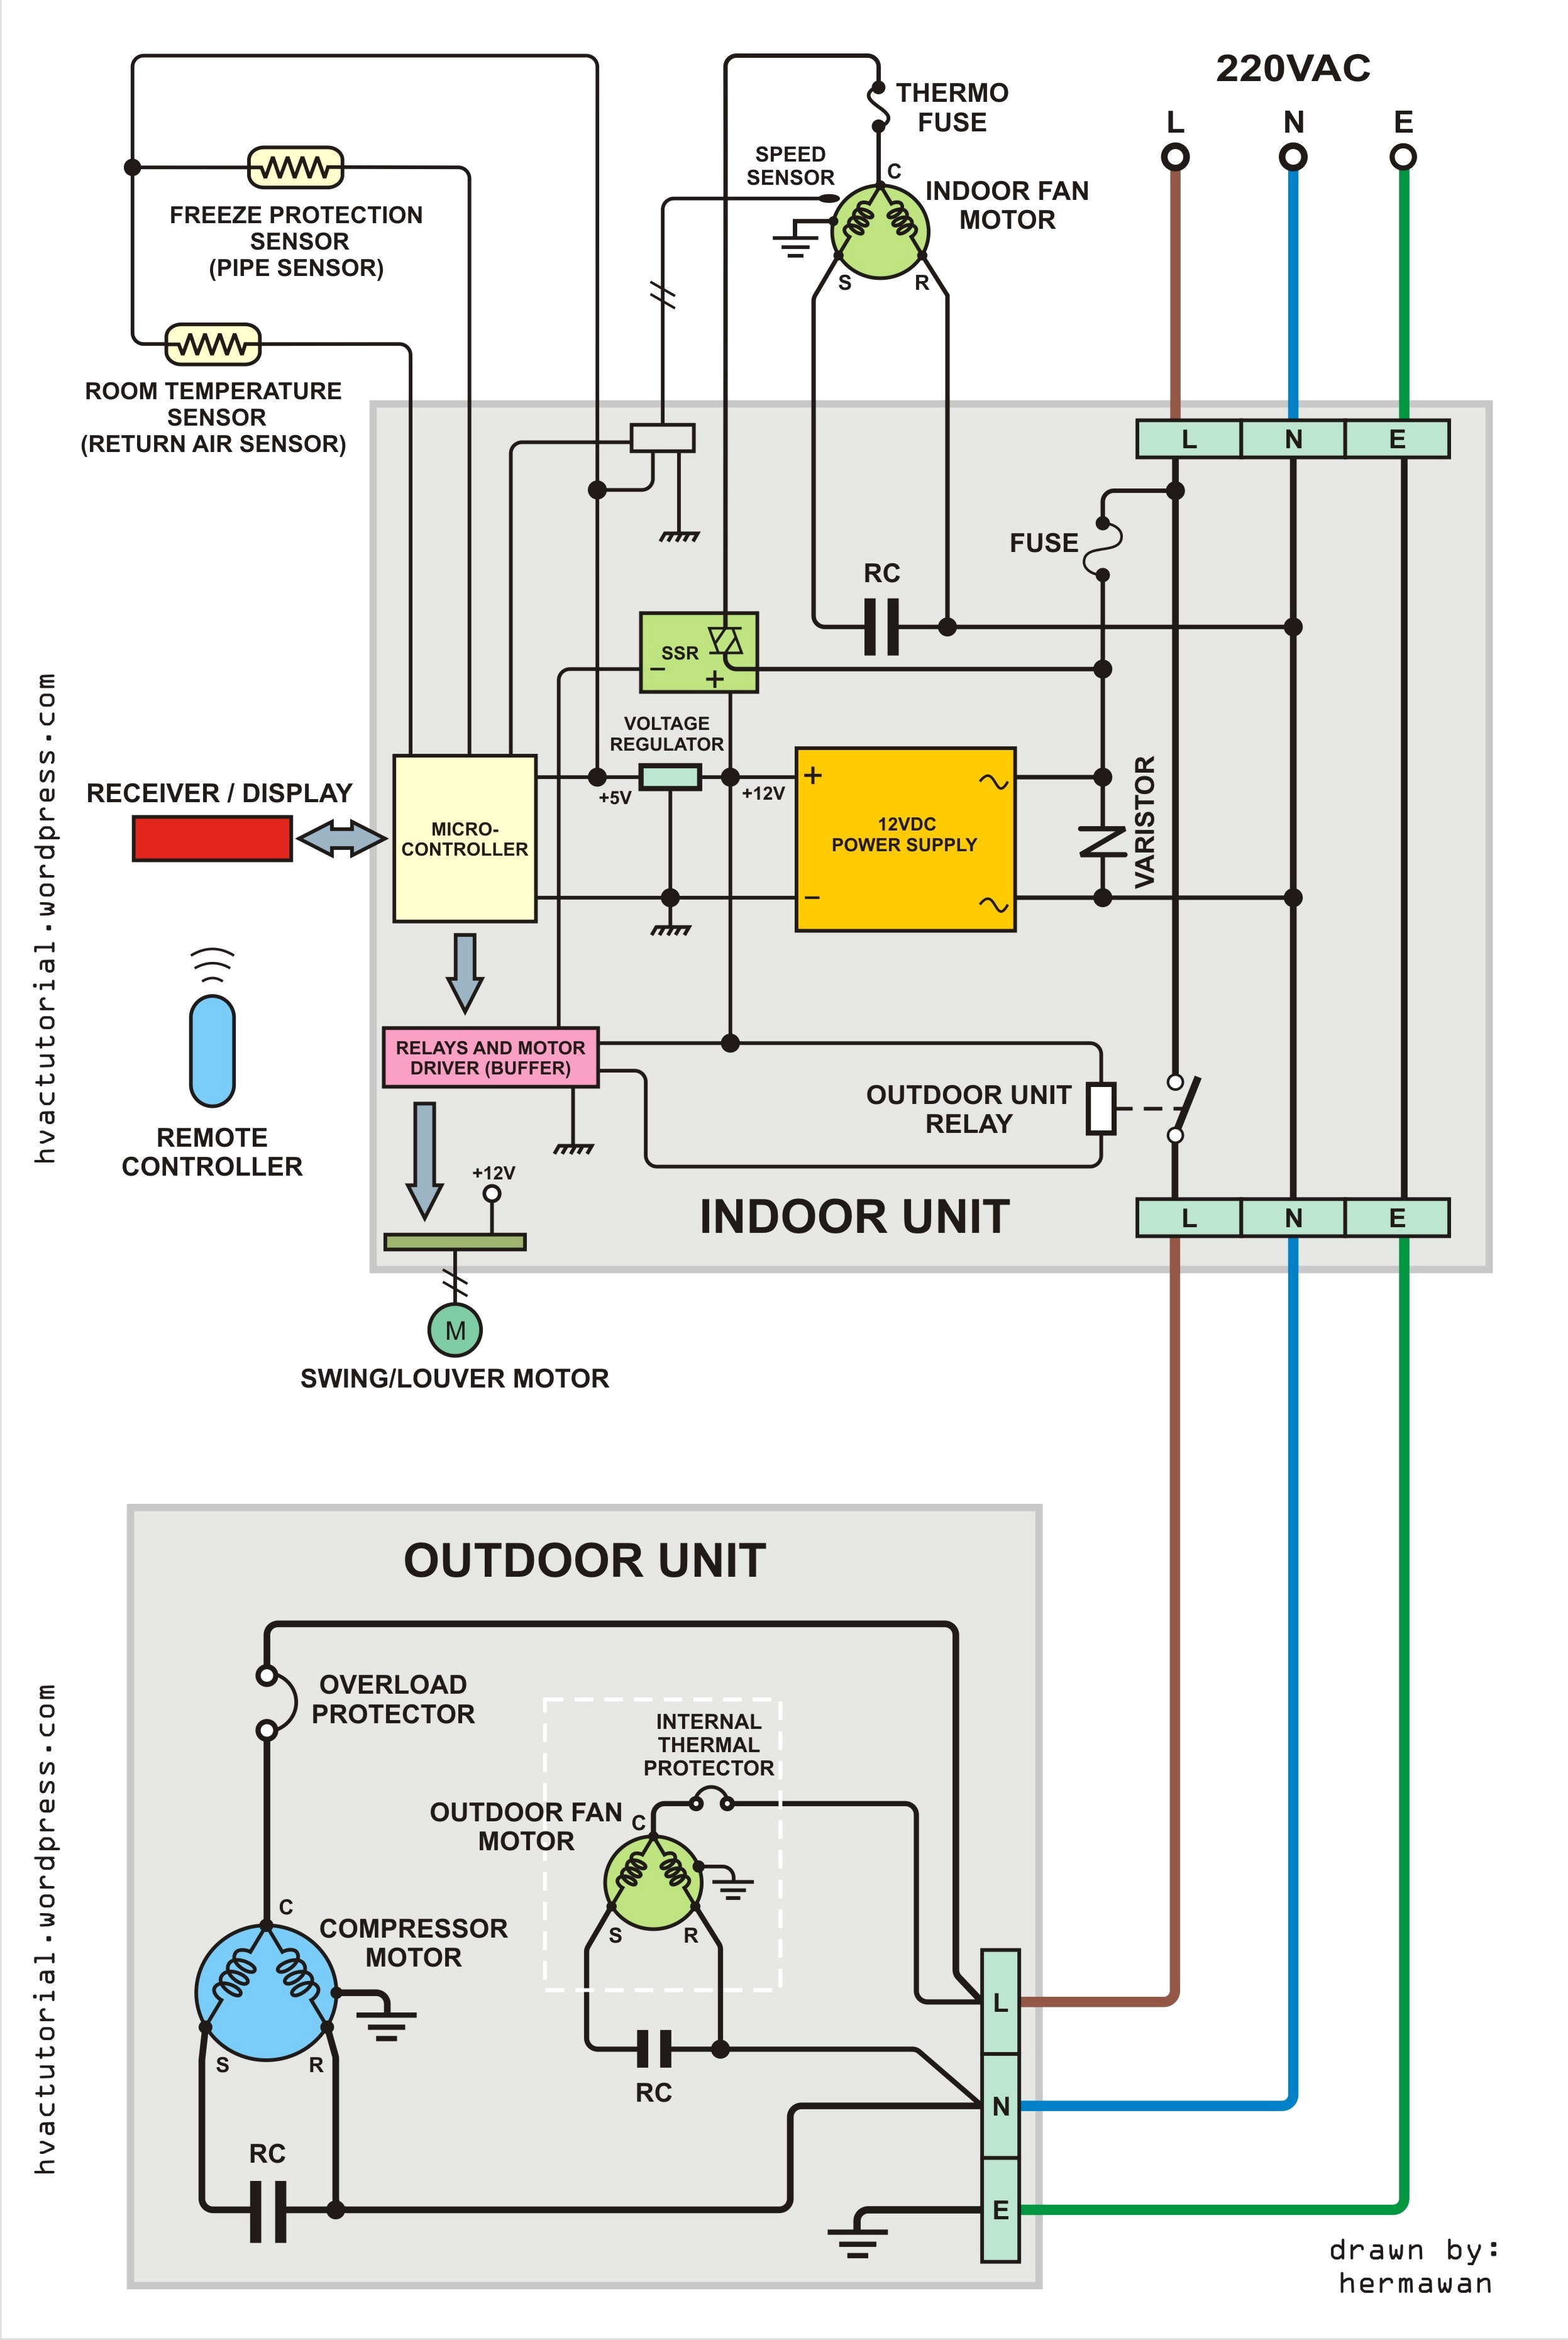 th8320wf1029 wiring diagram wiring diagrams air conditioning wiring central air conditioning wiring thermostat th8320wf1029 wiring diagram